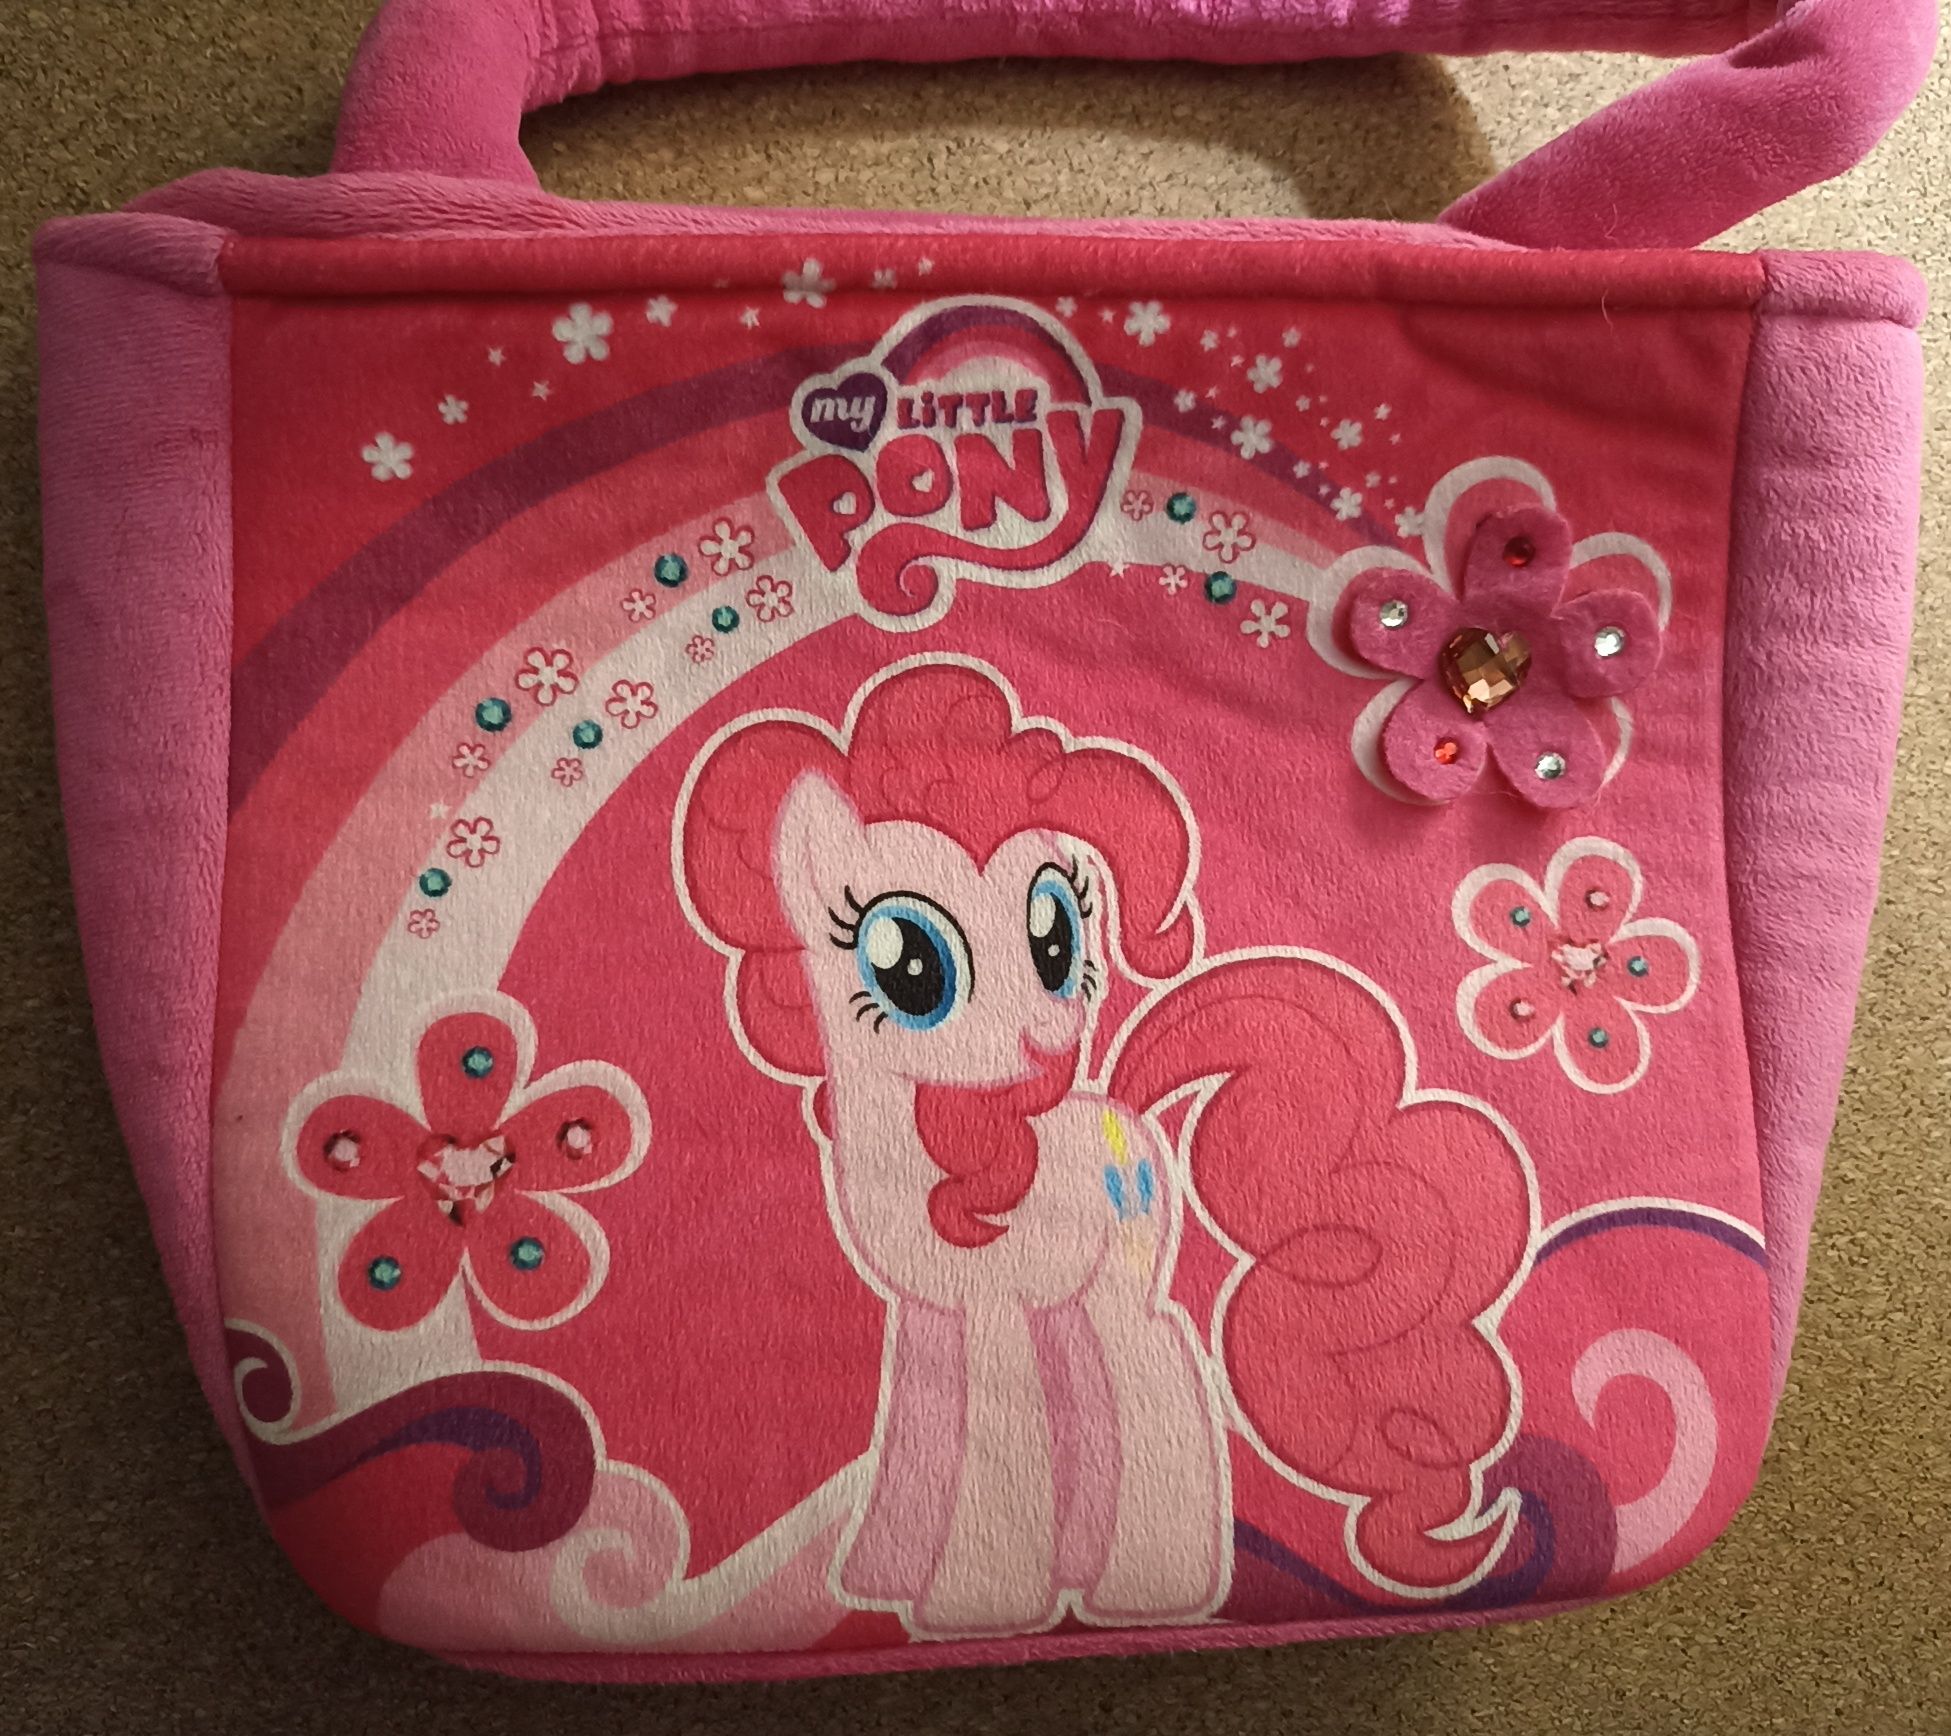 Сумка My little pony, сумка для дітей, сумка пінкі пай